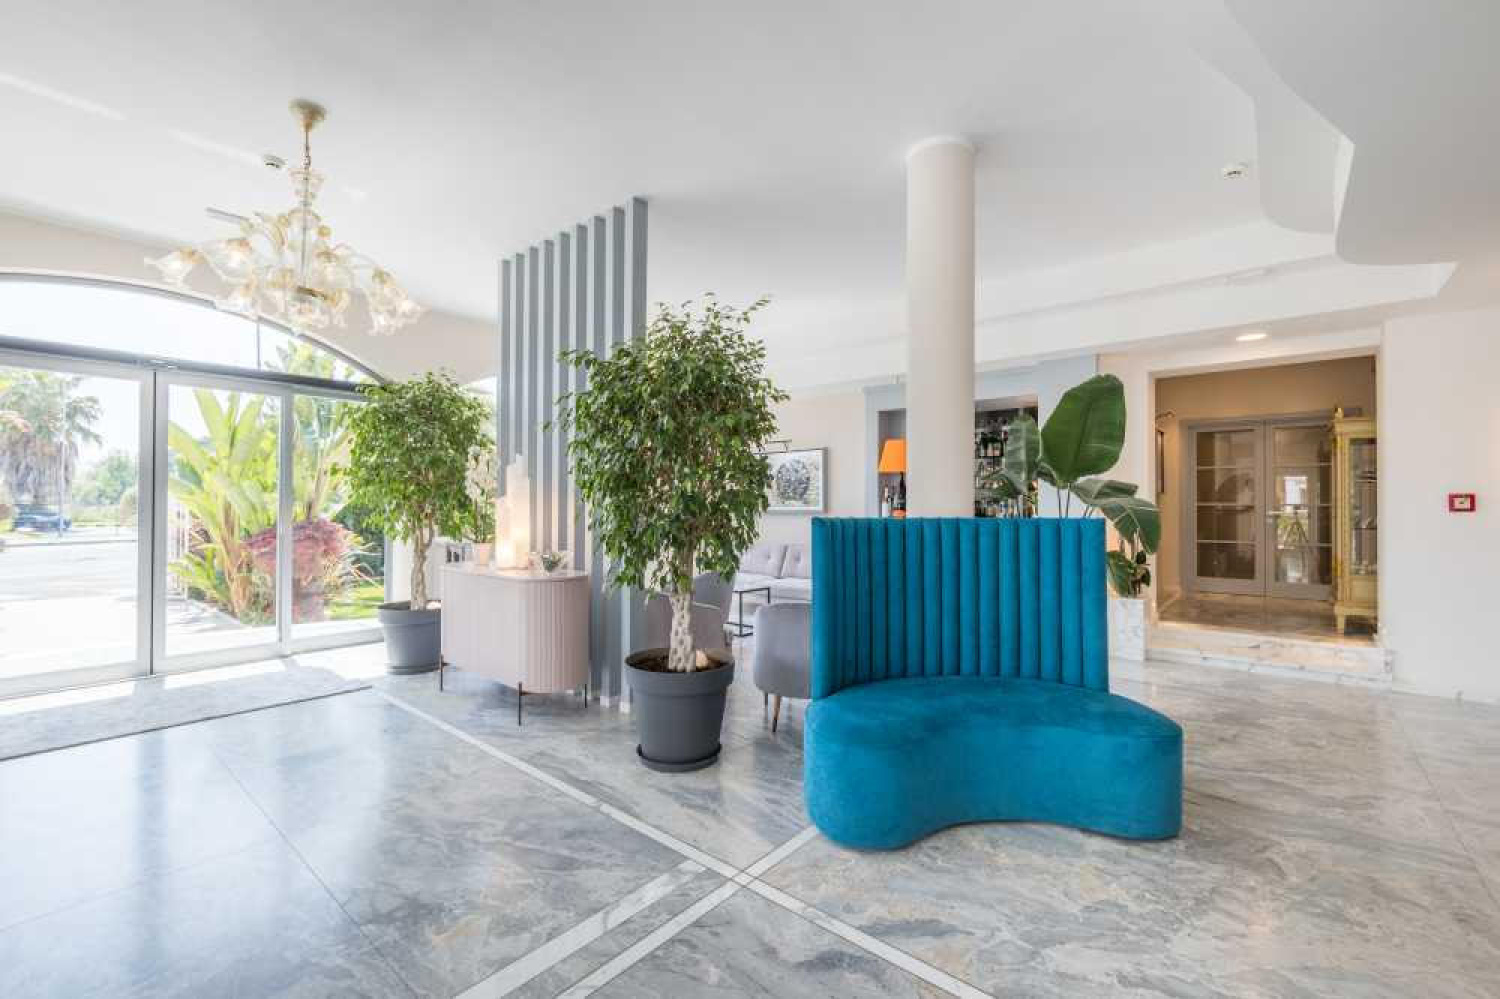 HOTEL LUNA IN MARINA DI MASSA - IBFOR - Your design shop